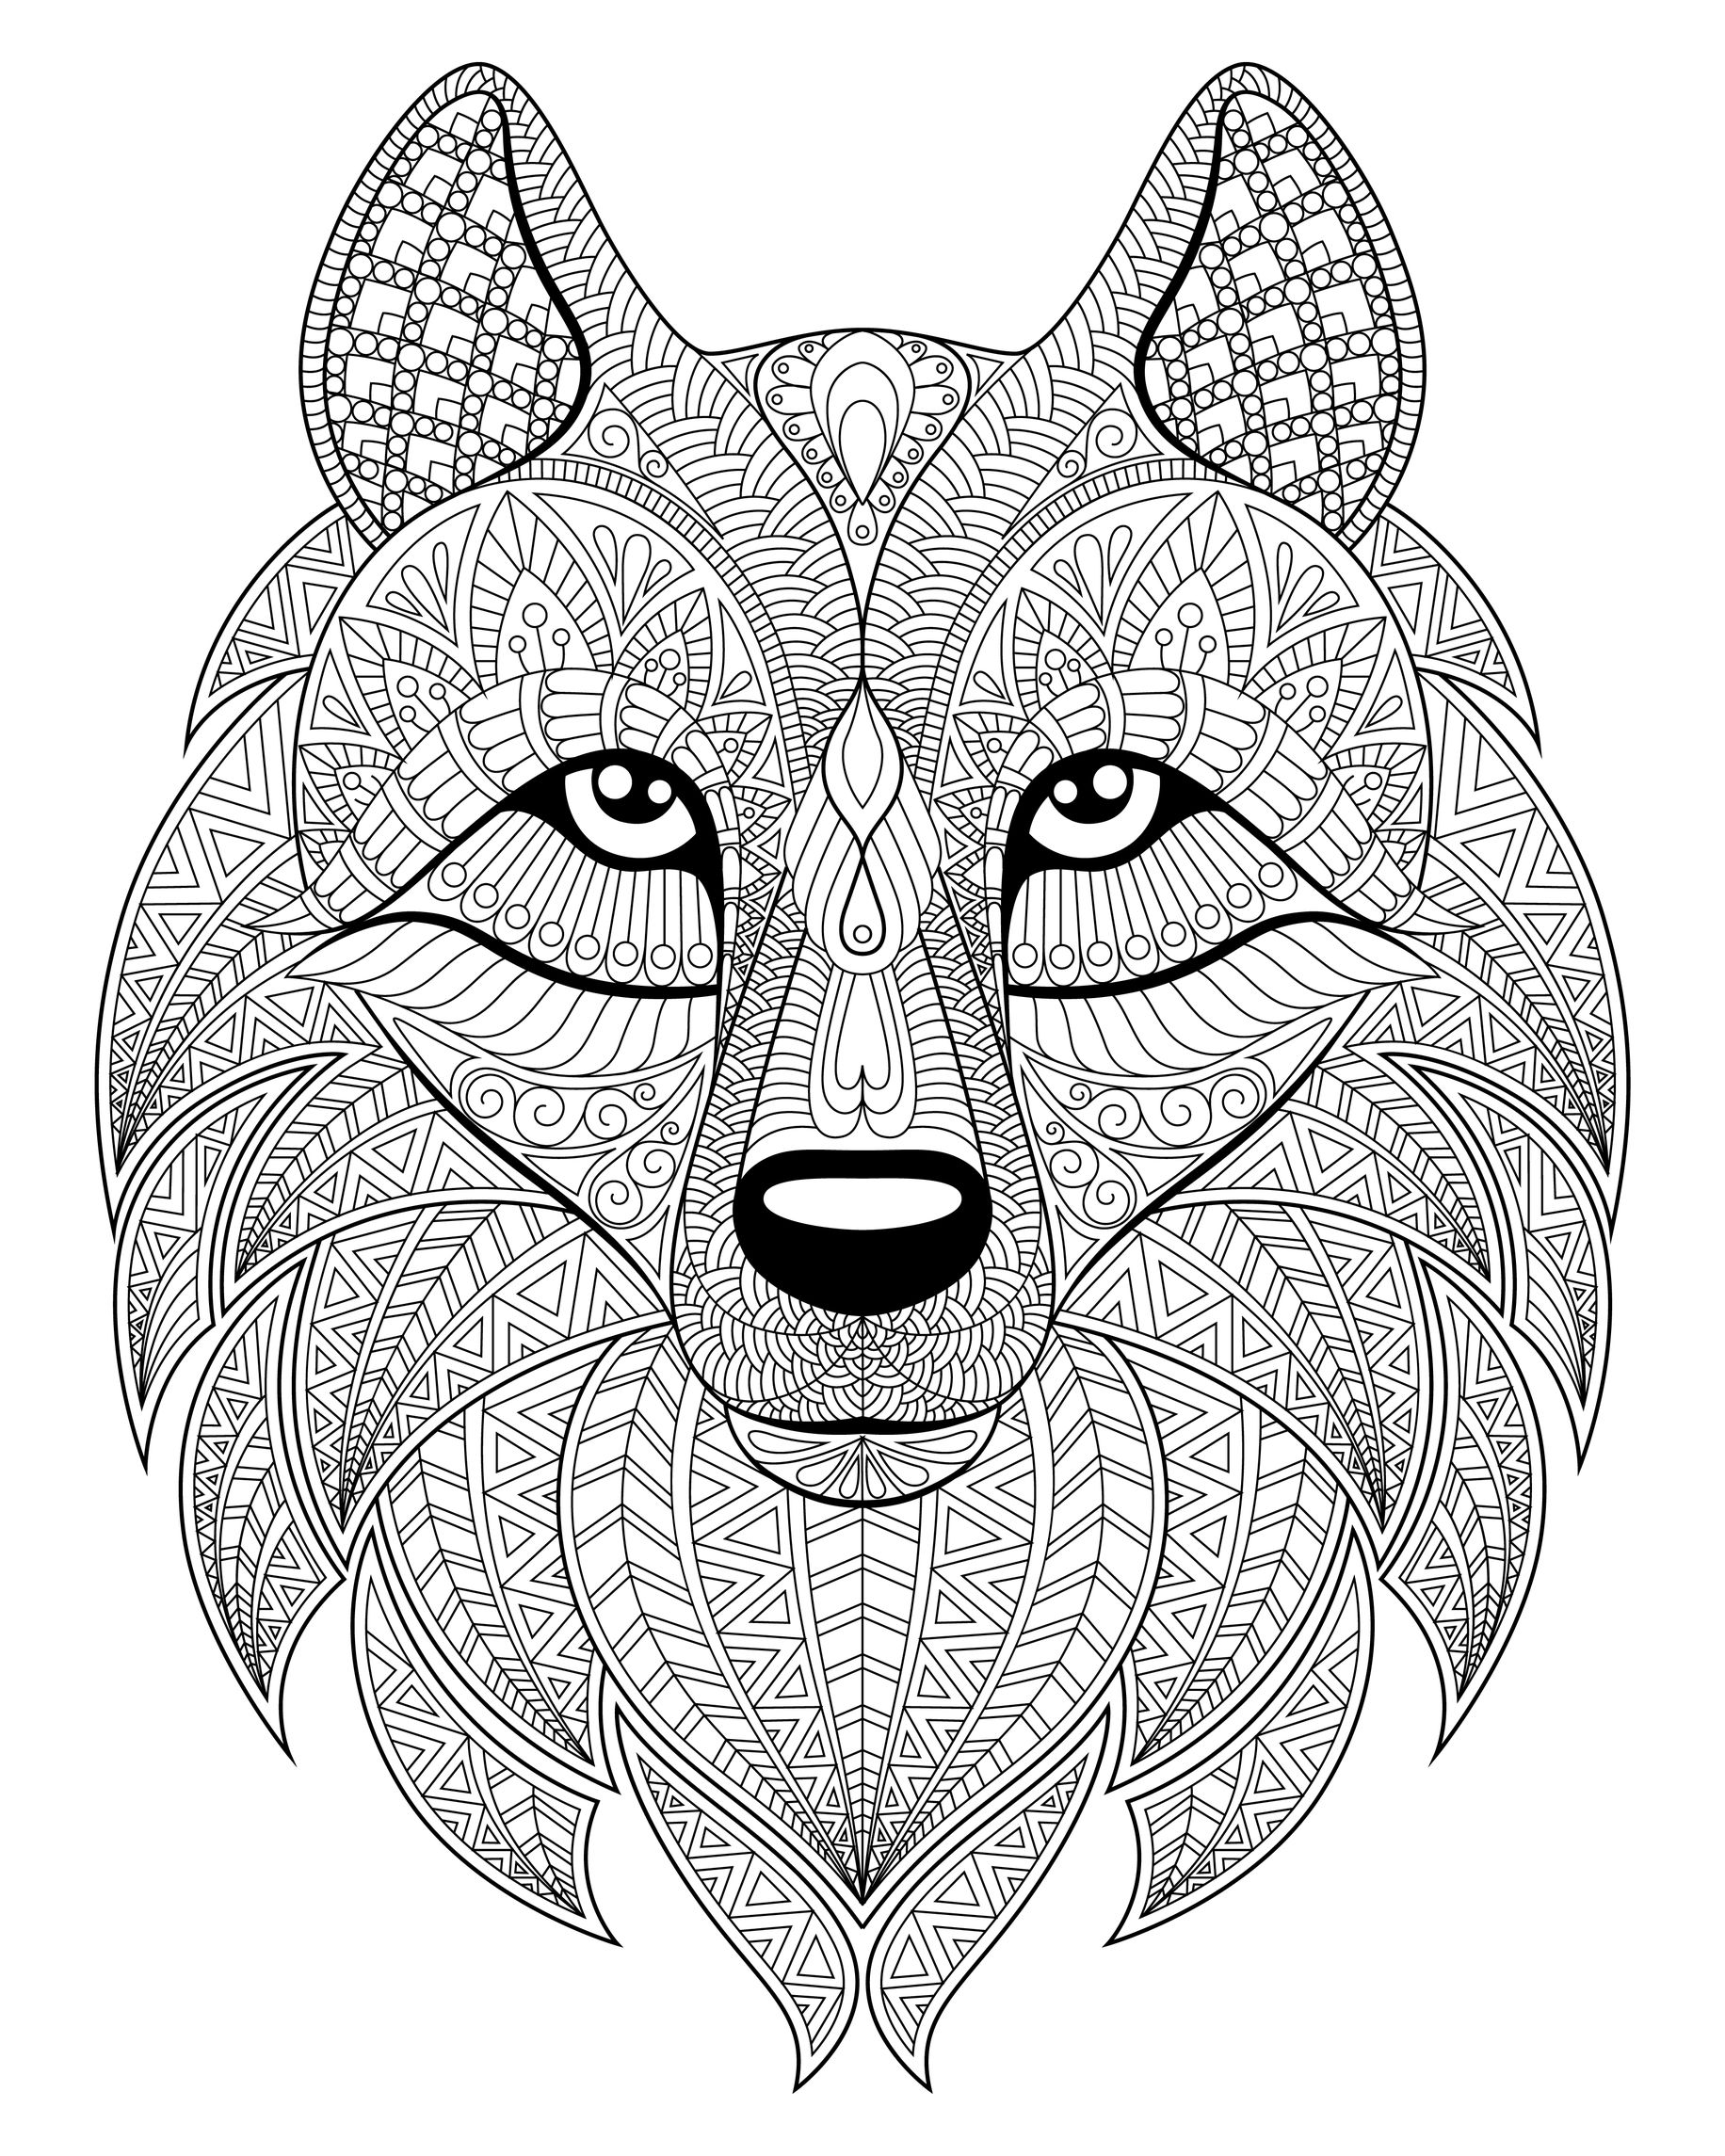 Tête de loup, avec motifs complexes, Artiste : alka5051   Source : 123rf